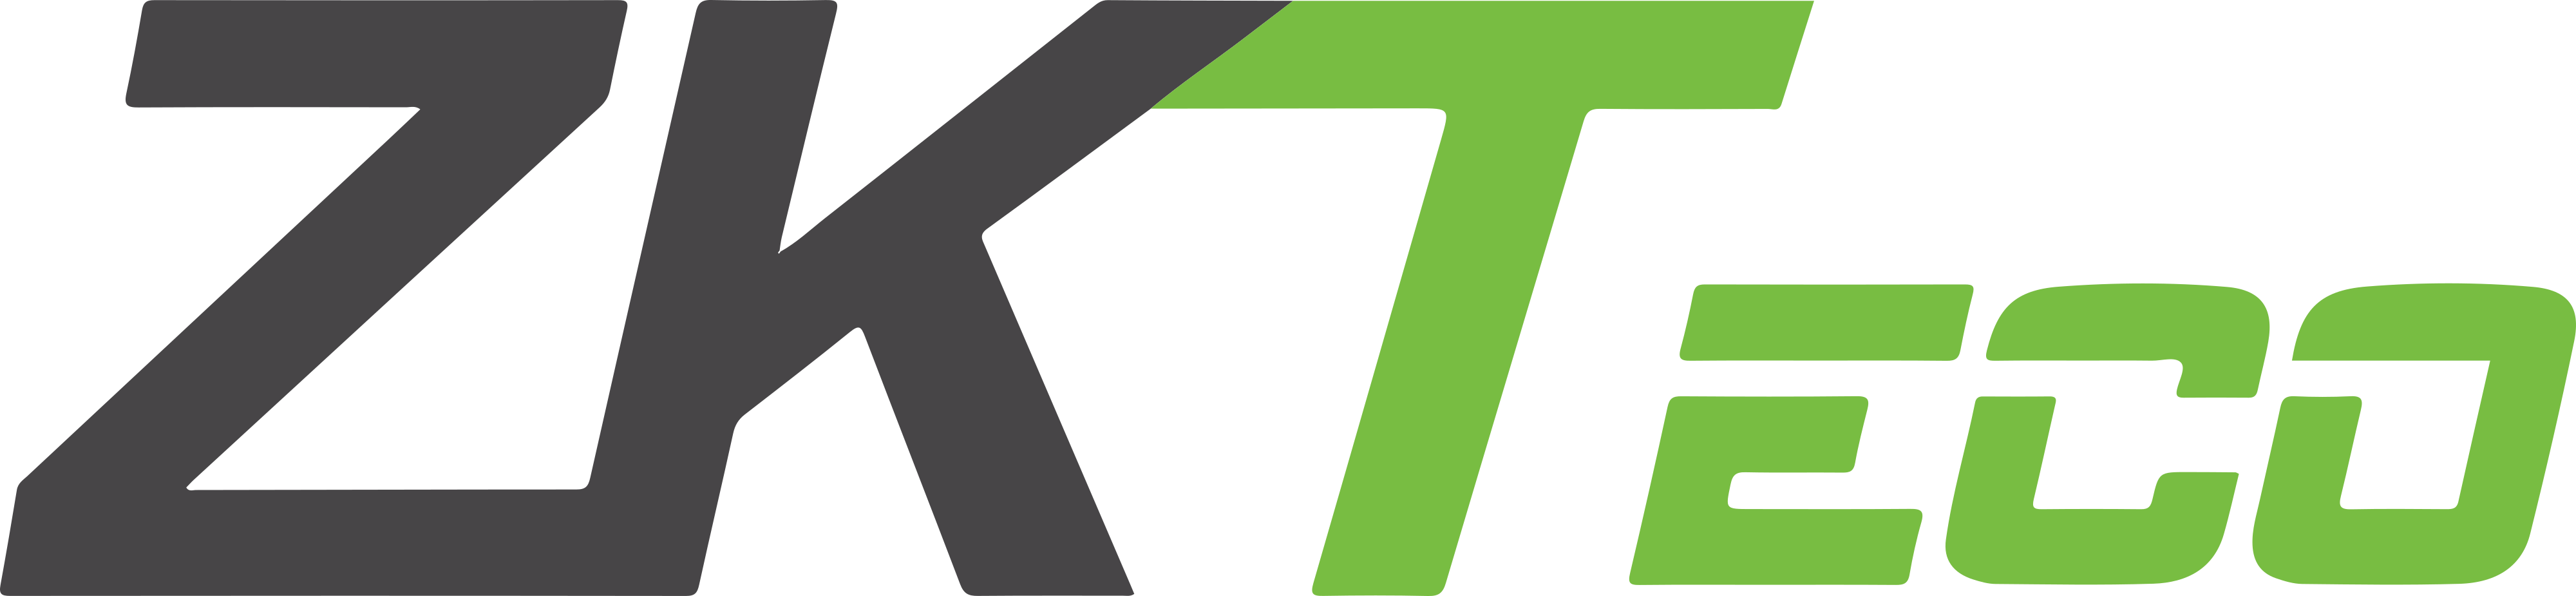 zkteco-logo-big